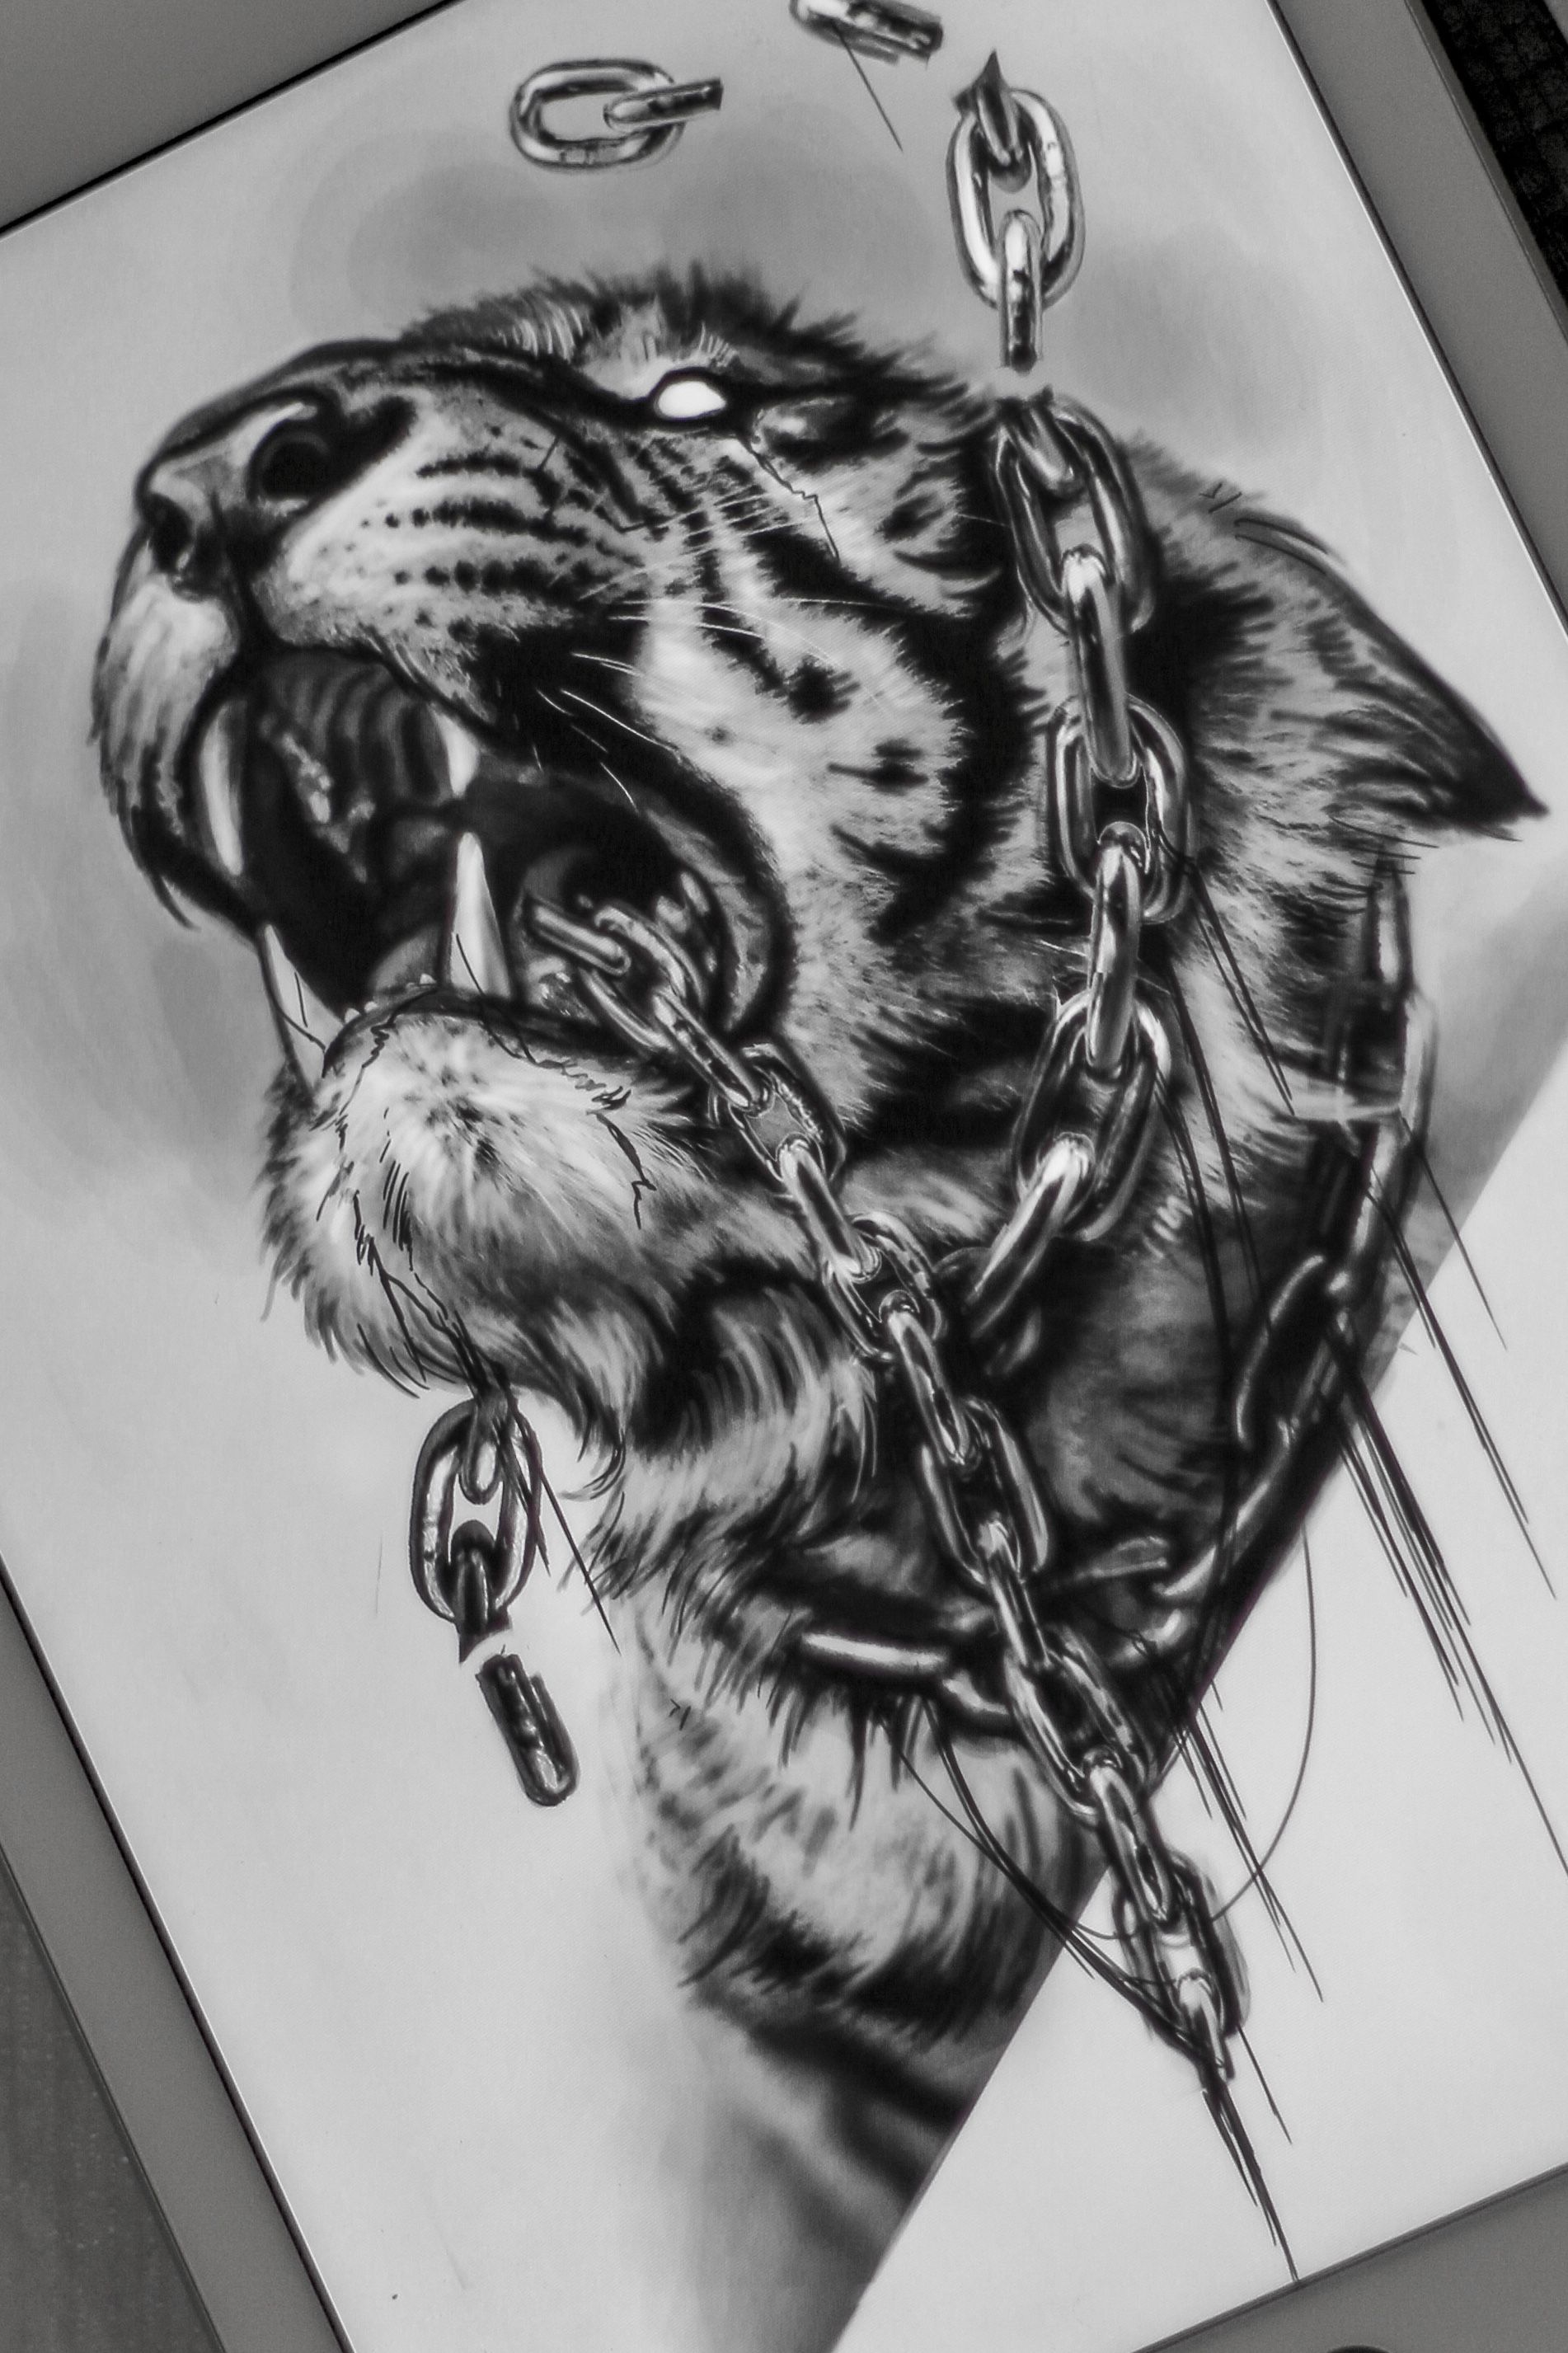 Big Black Tiger Tattoos Men Wolf Leopard Tattos Waterproof Large Beast  Monster Body Arm Legs Temporary Tatoos Fake Tattoo Art  Temporary Tattoos   AliExpress